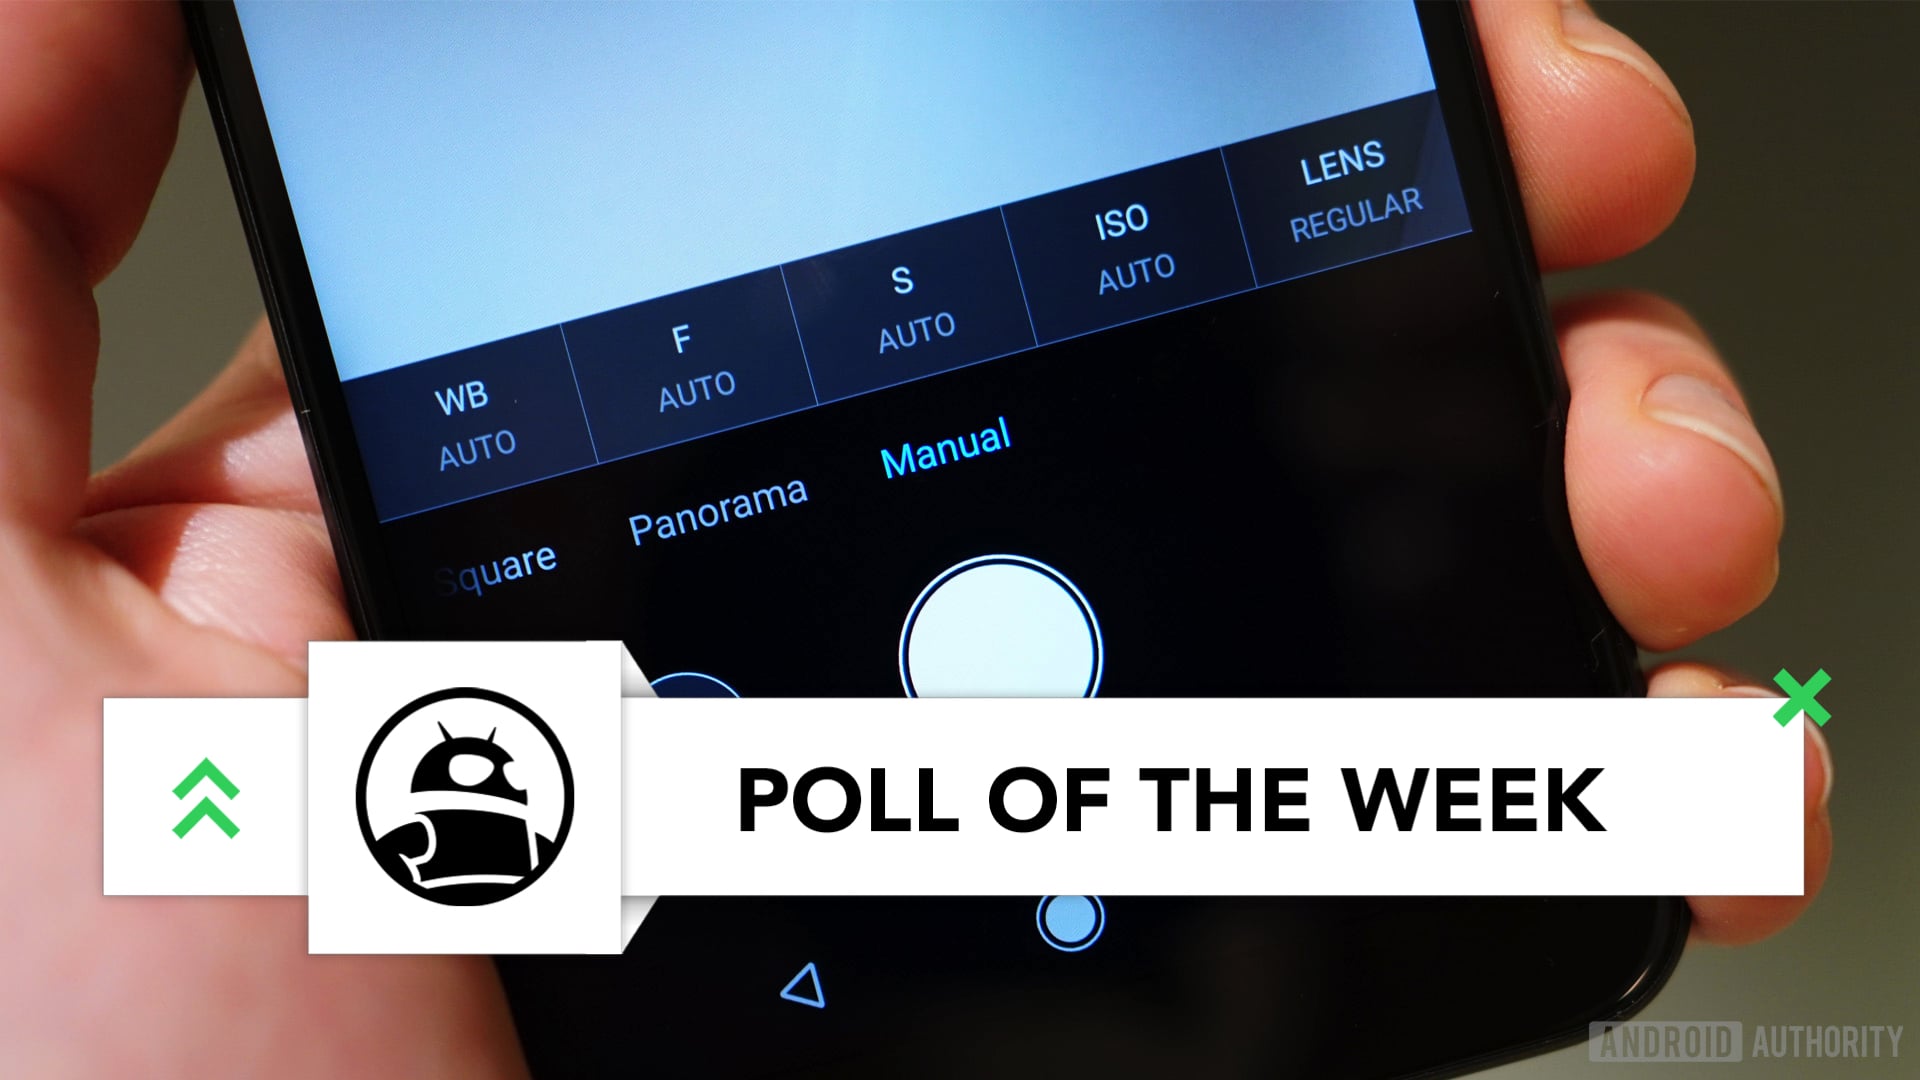 xiaomi mi a2 manual camera poll of the week